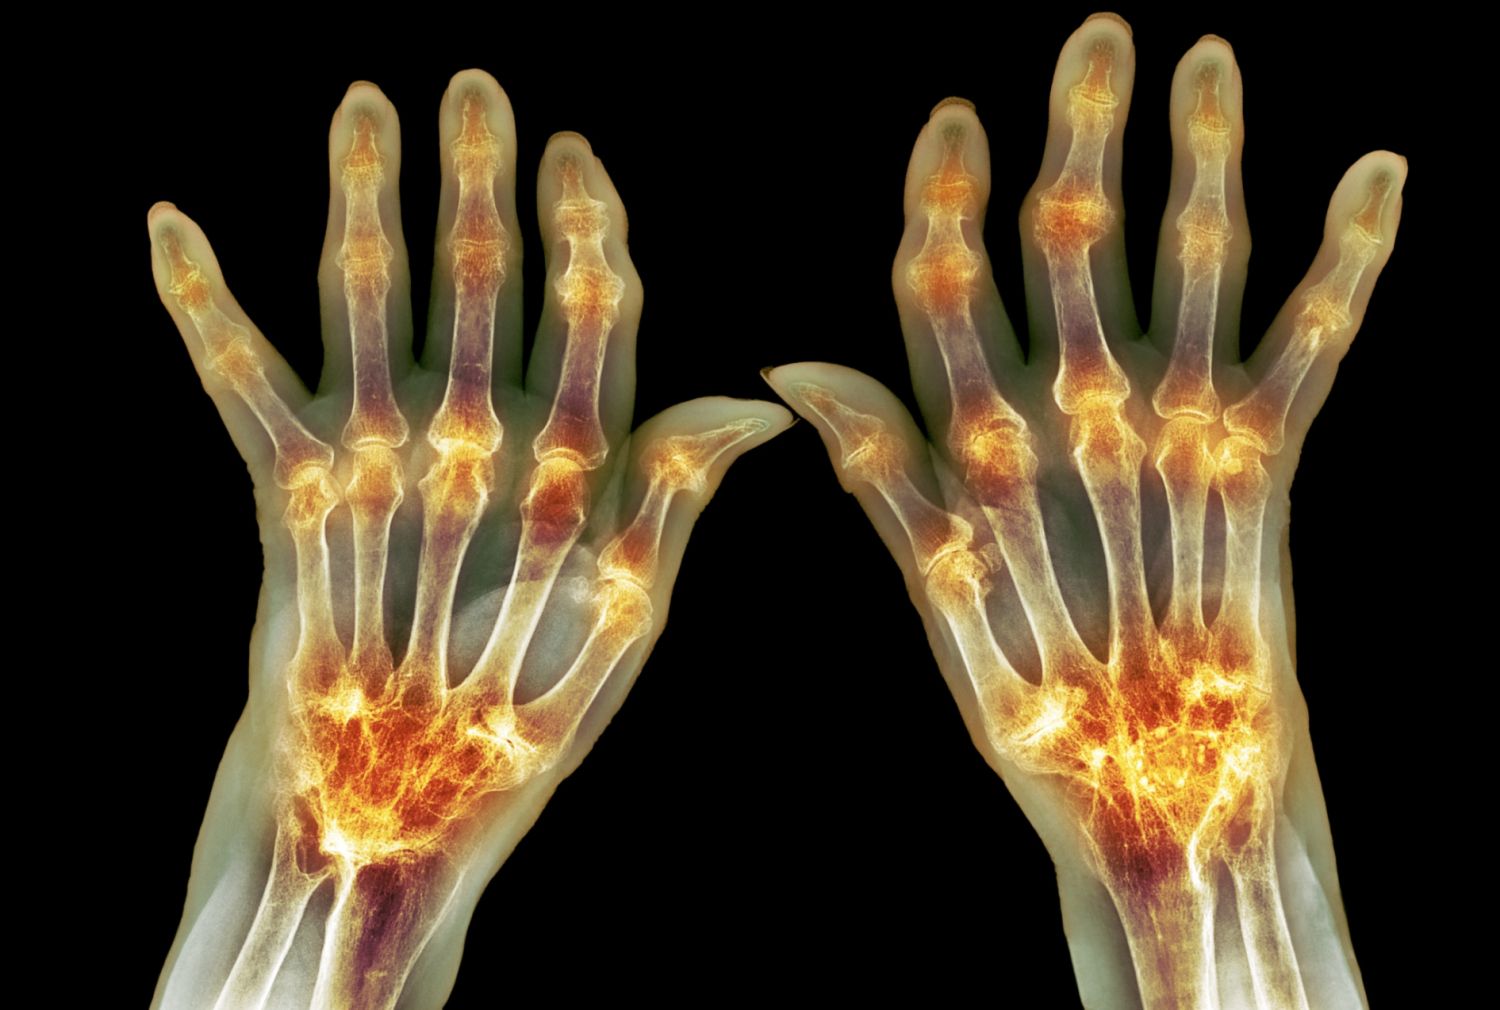 Methods of treatment of rheumatoid arthritis